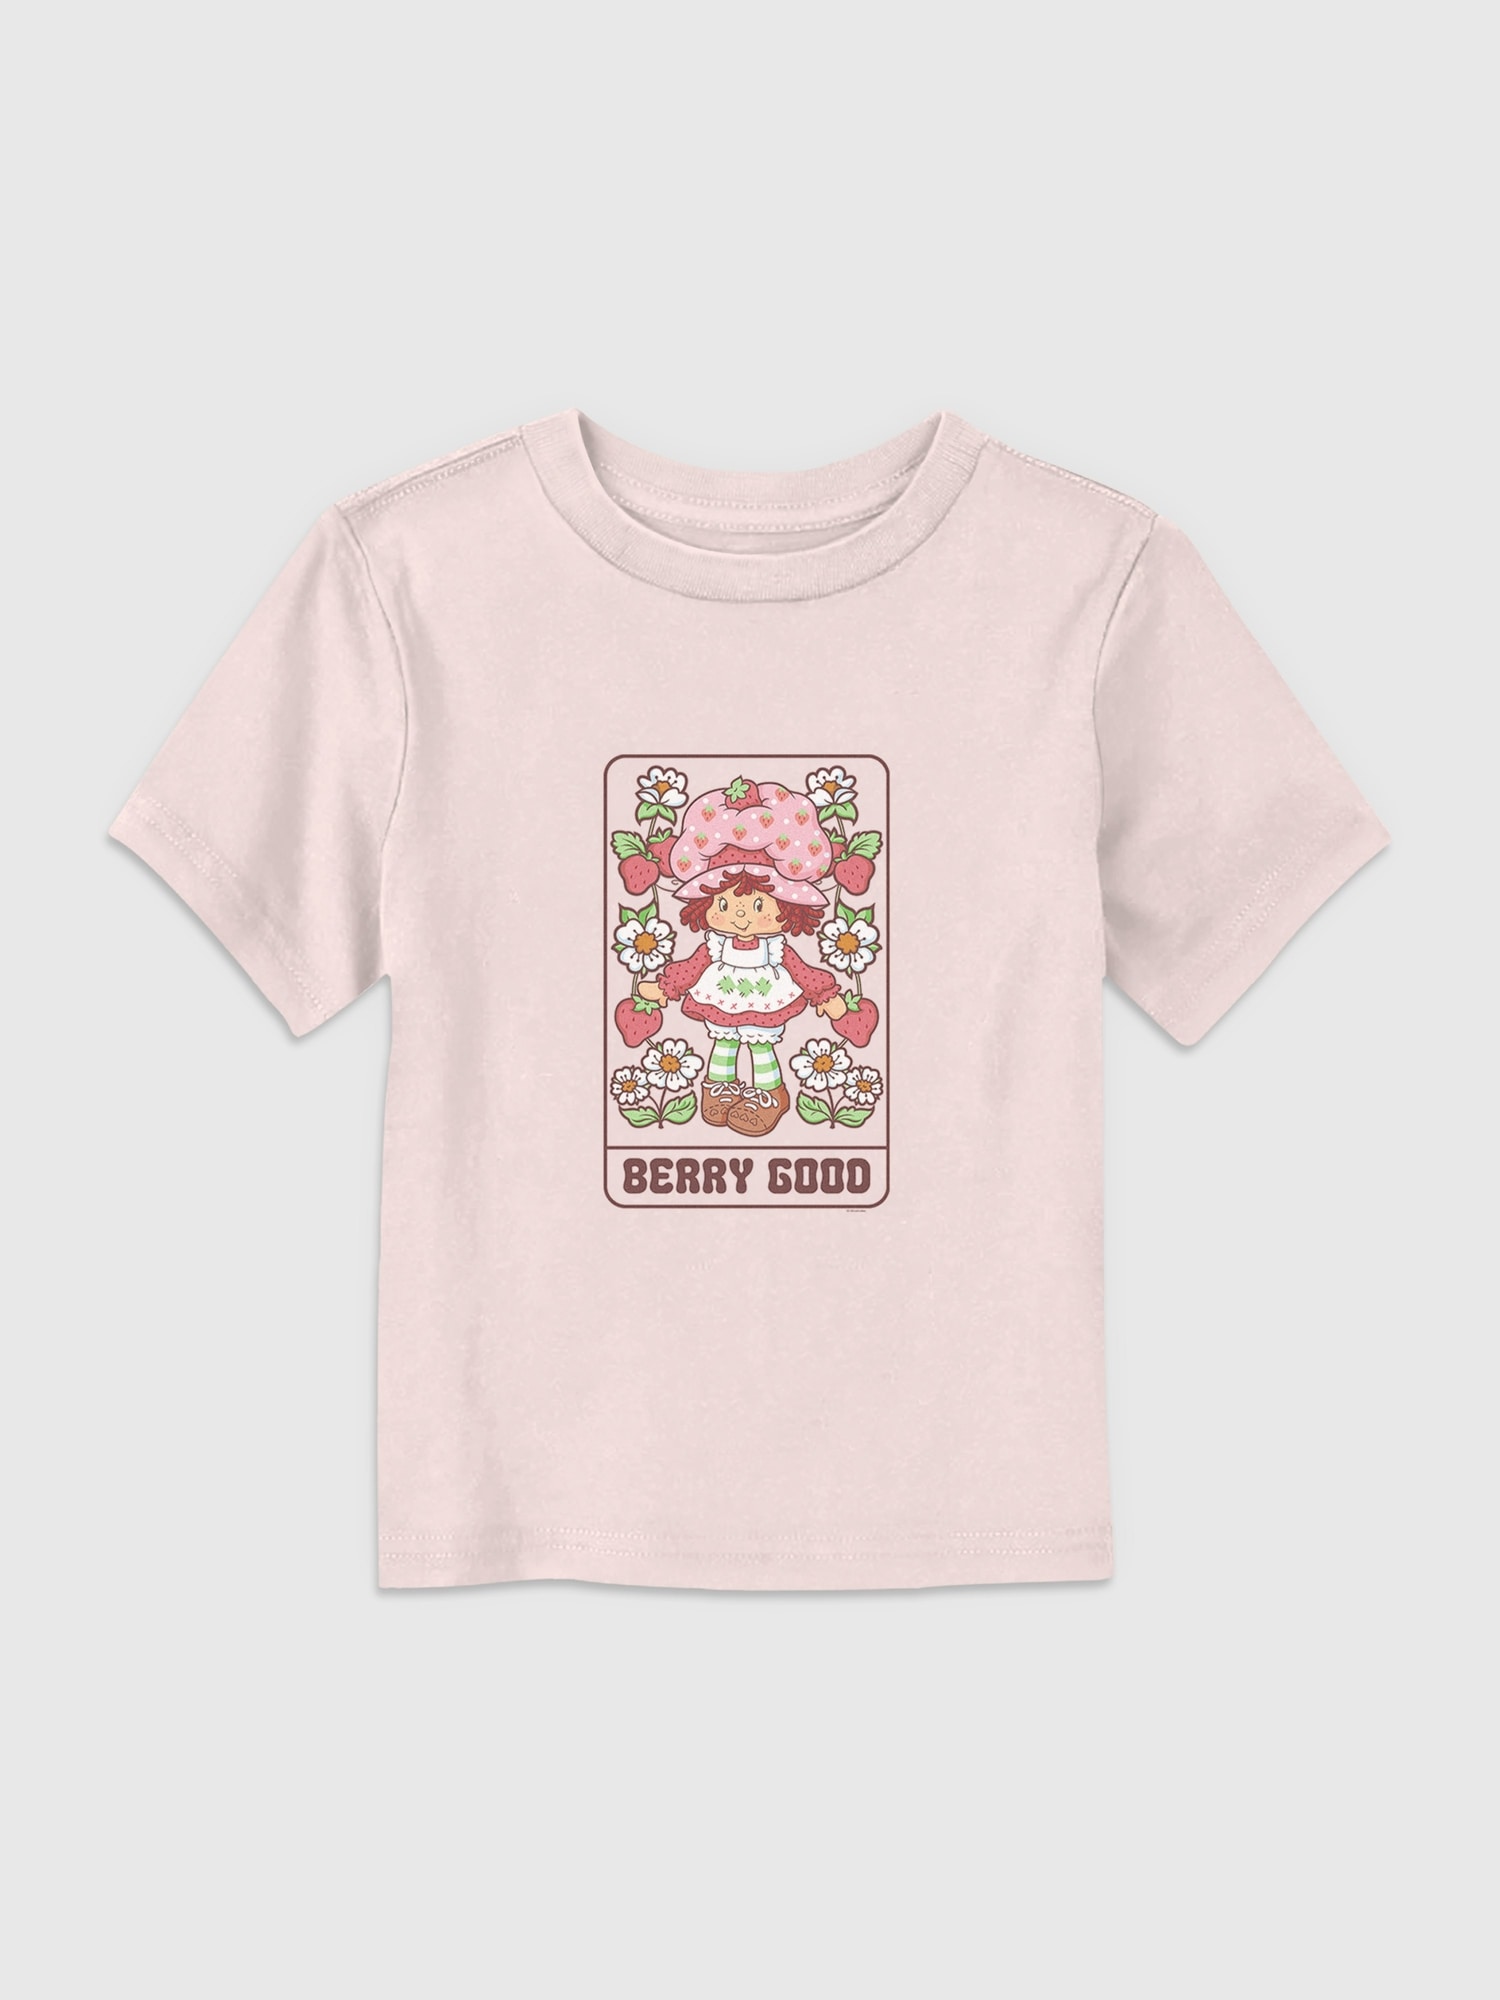 Toddler Strawberry Shortcake Berry Good Graphic Tee